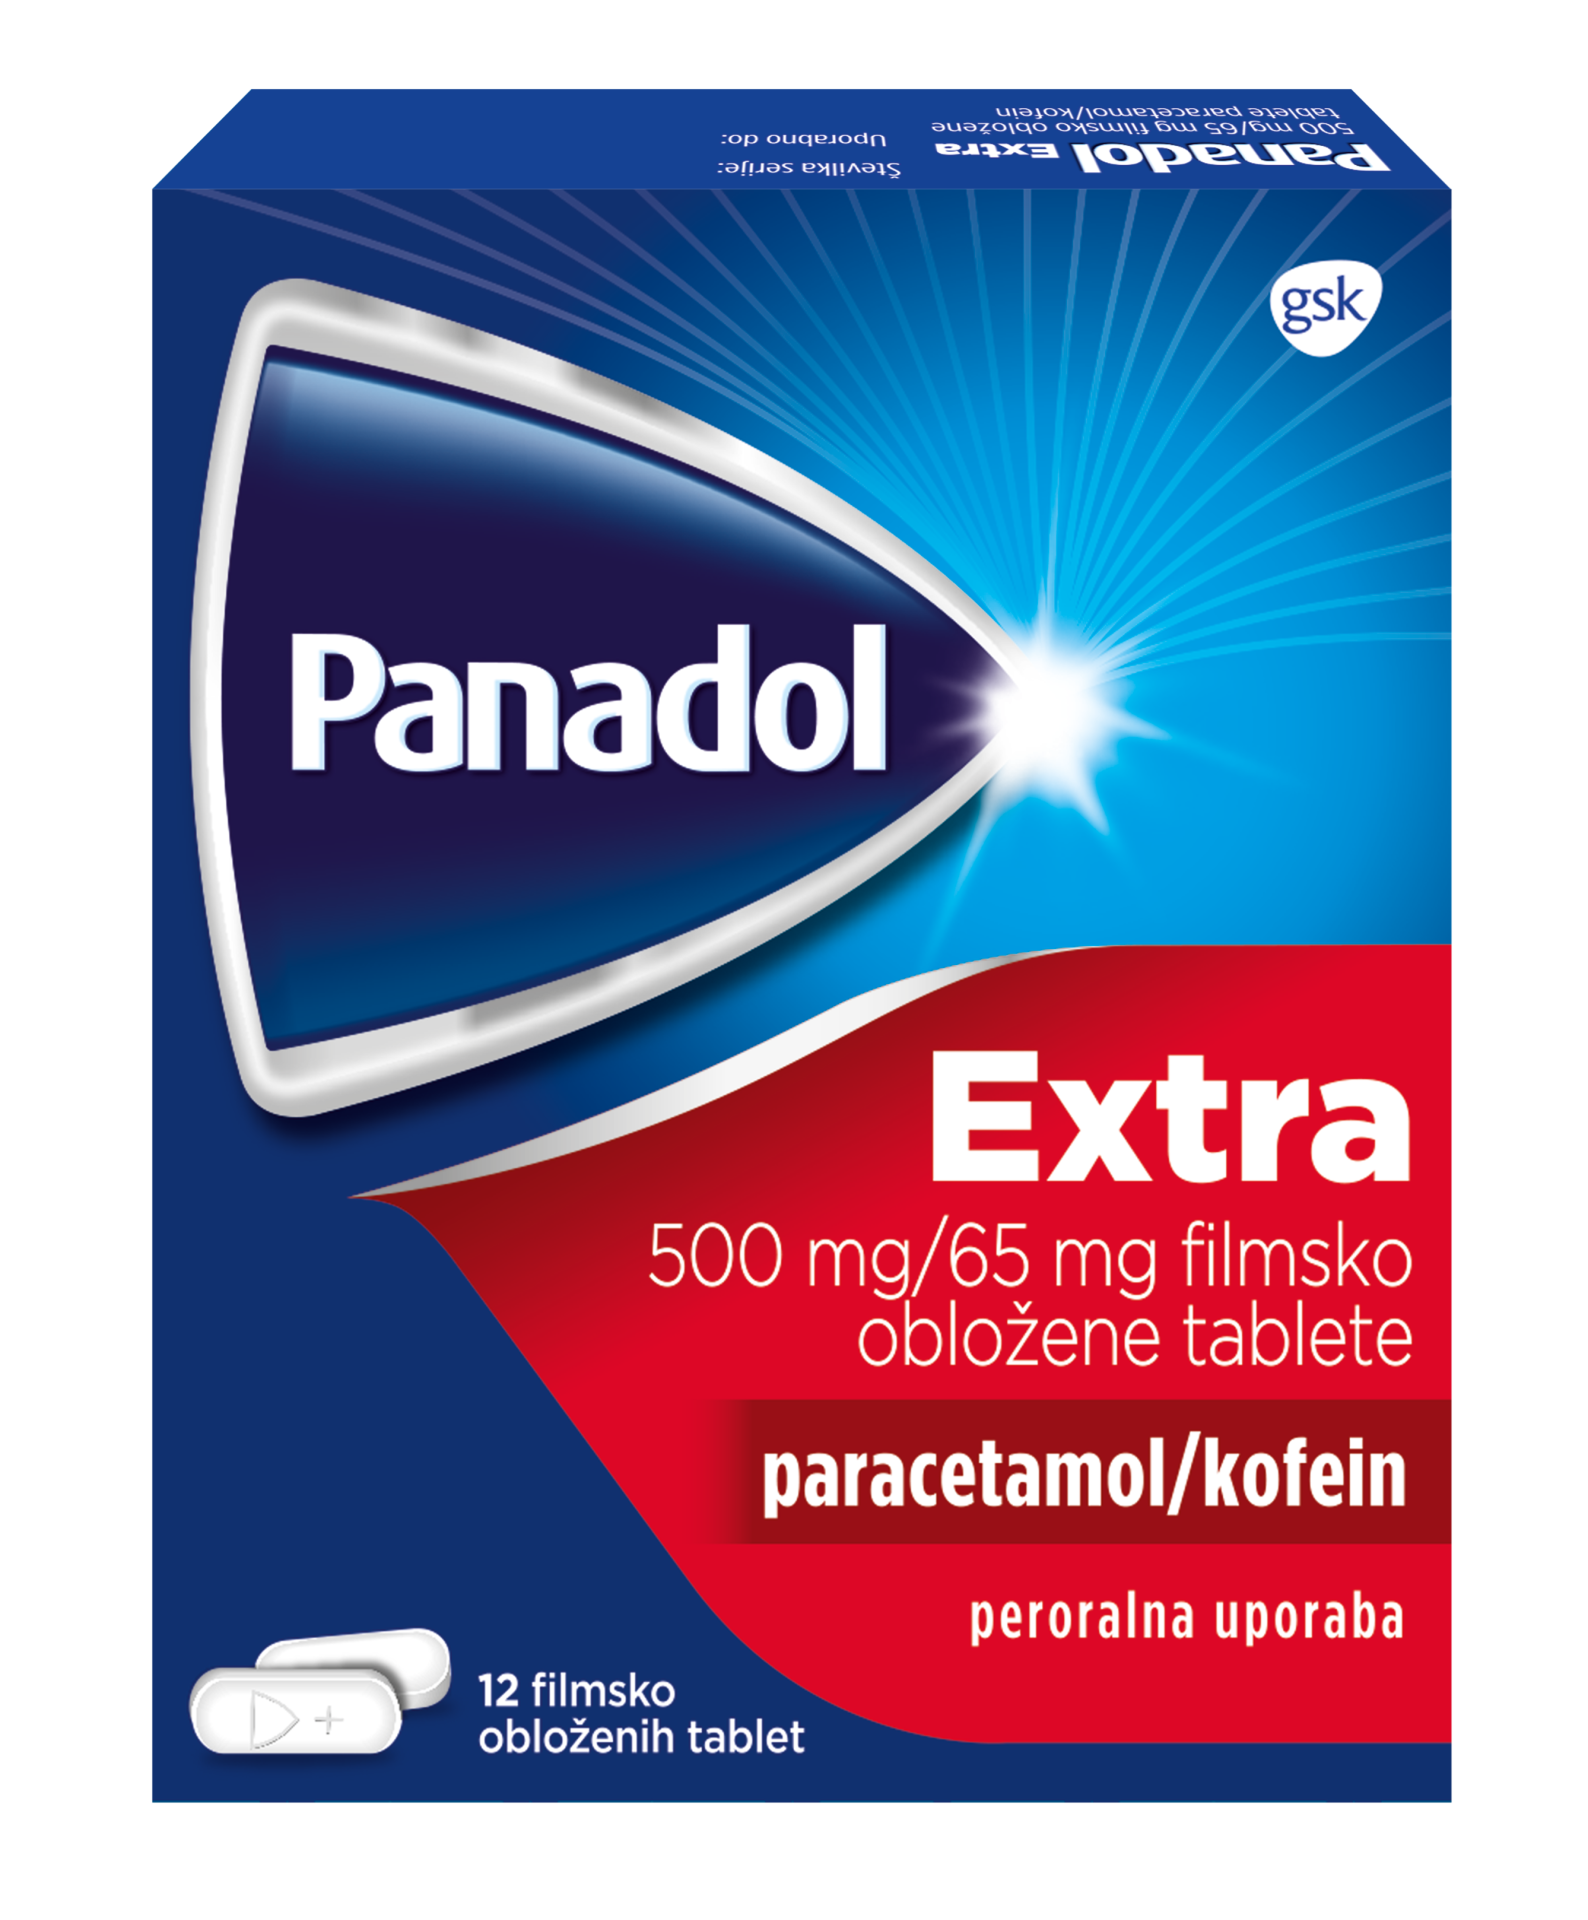 Panadol Extra 500 mg/65 mg filmsko obložene tablete, 12 tablet